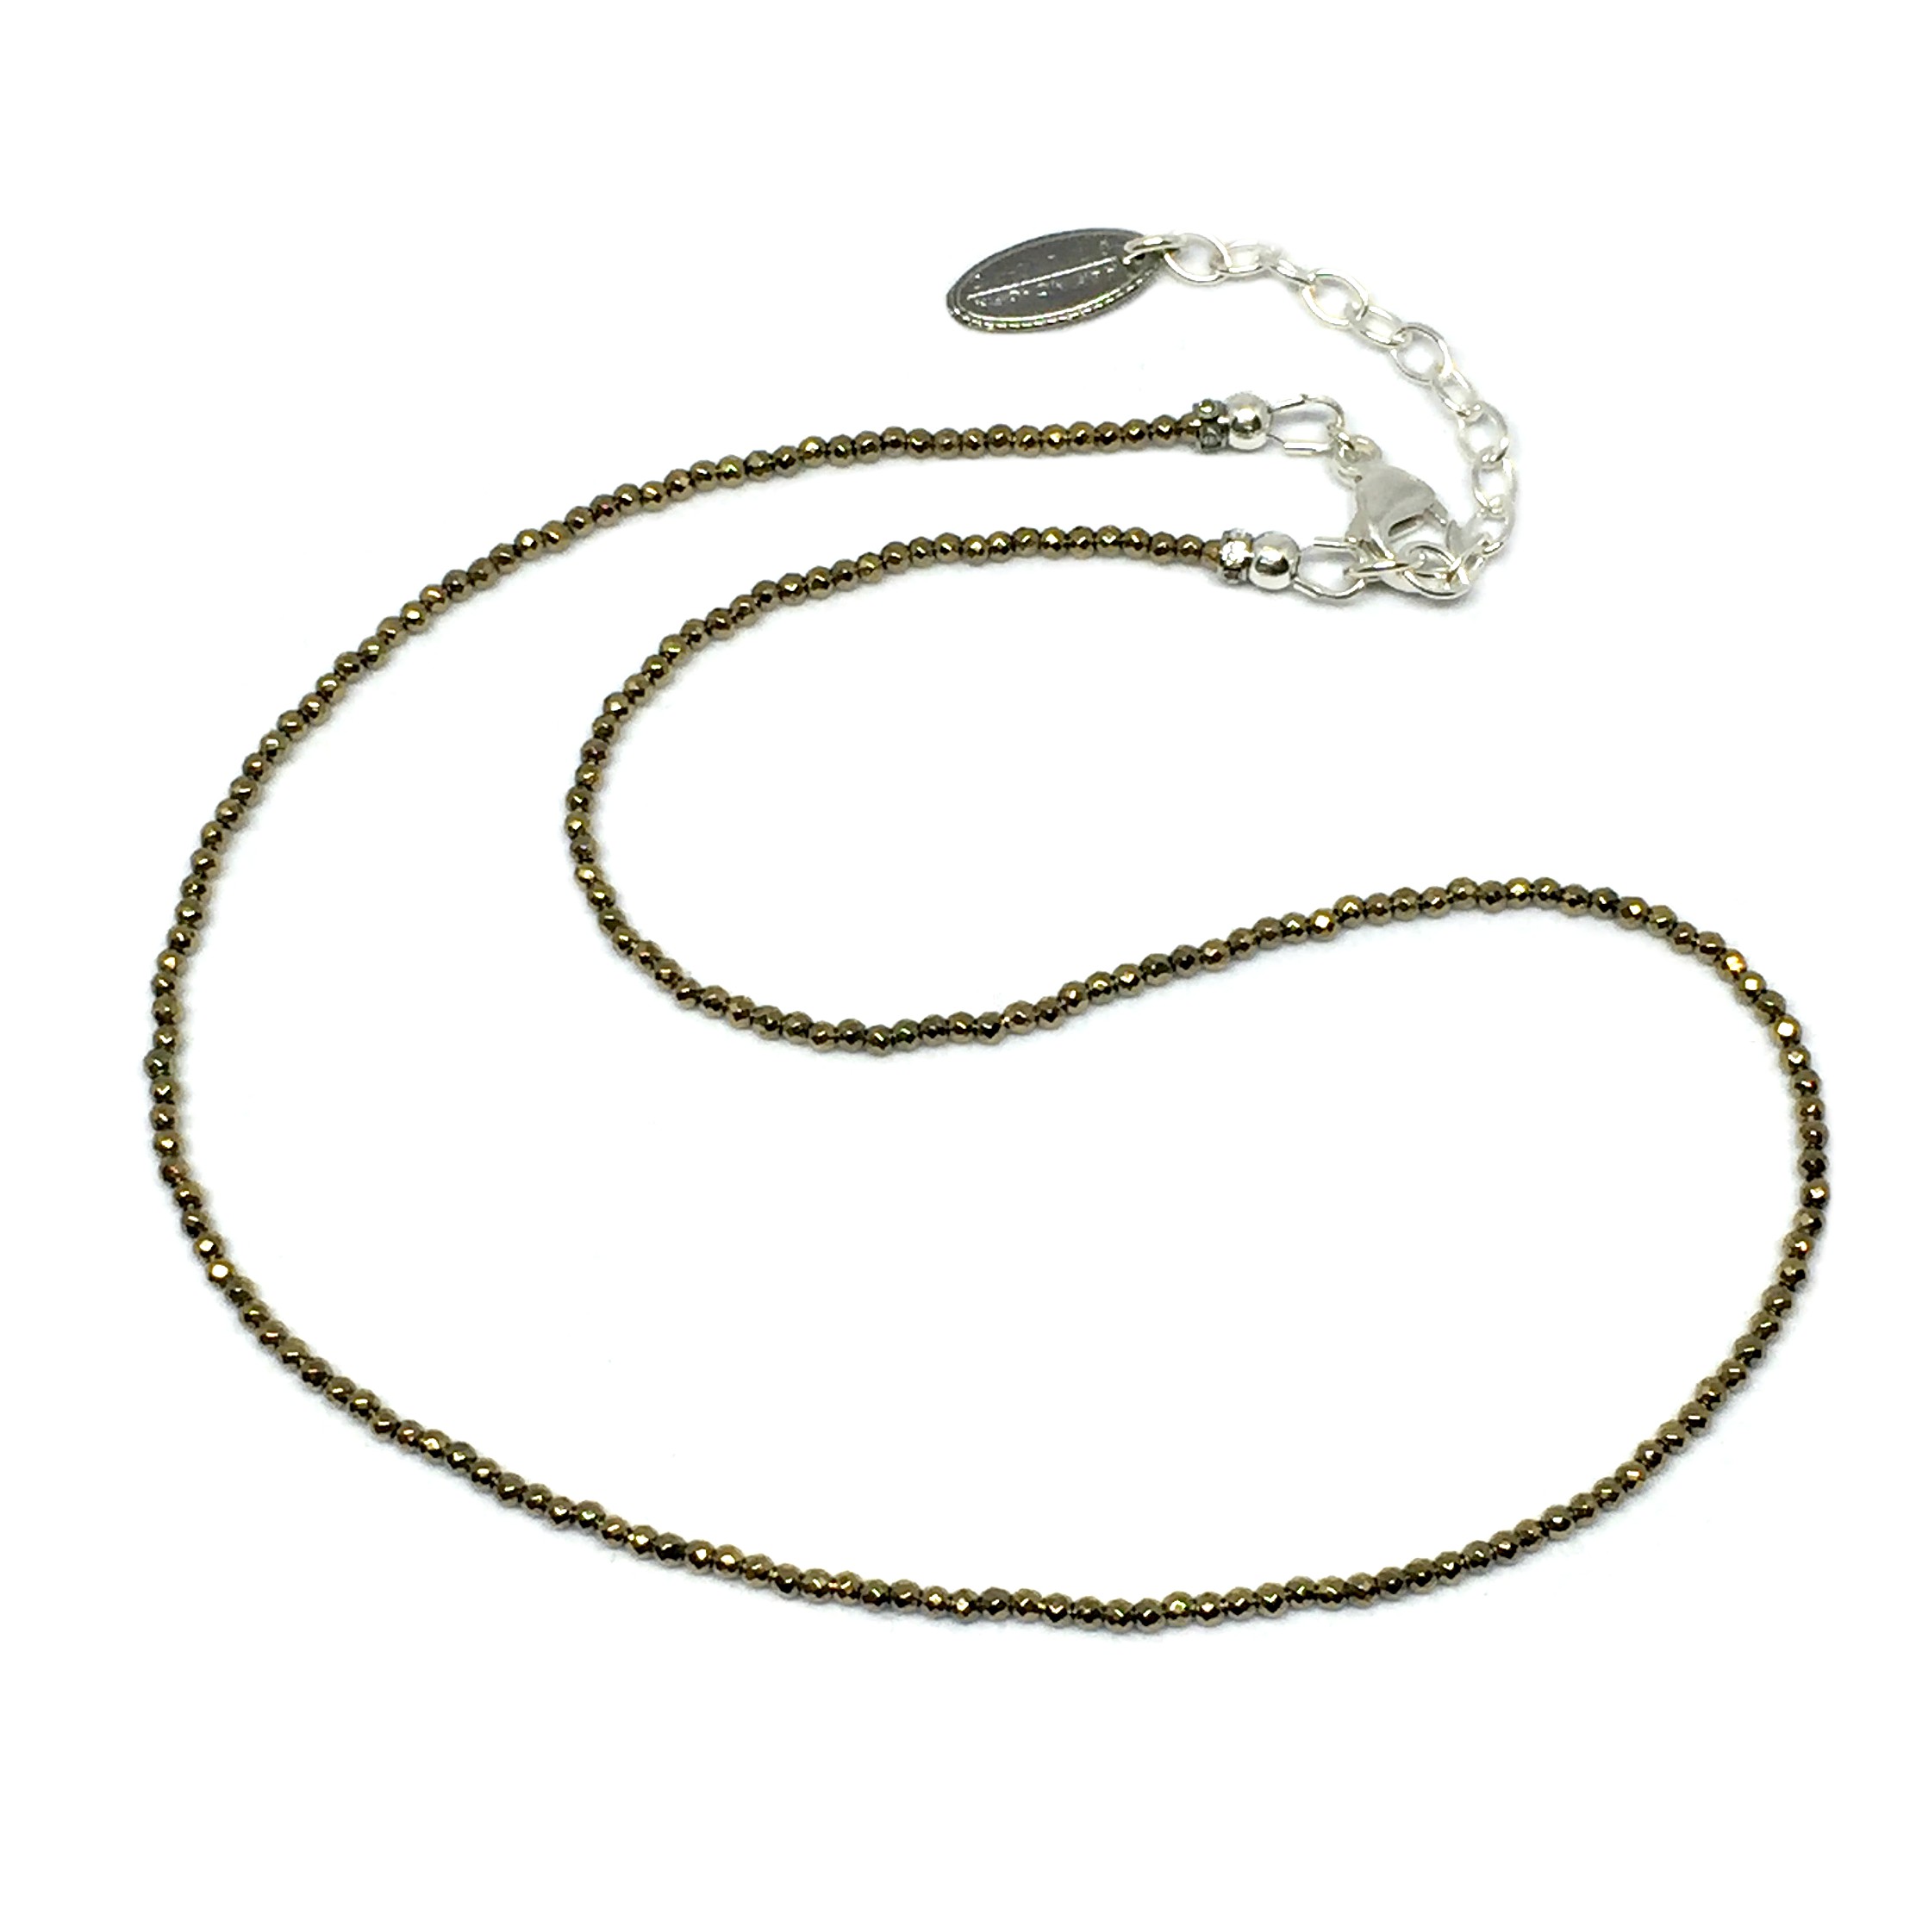 Gold hematite sparkle necklace by Karyn Chopik | Effusion Art Gallery + Cast Glass Studio, Invermere BC